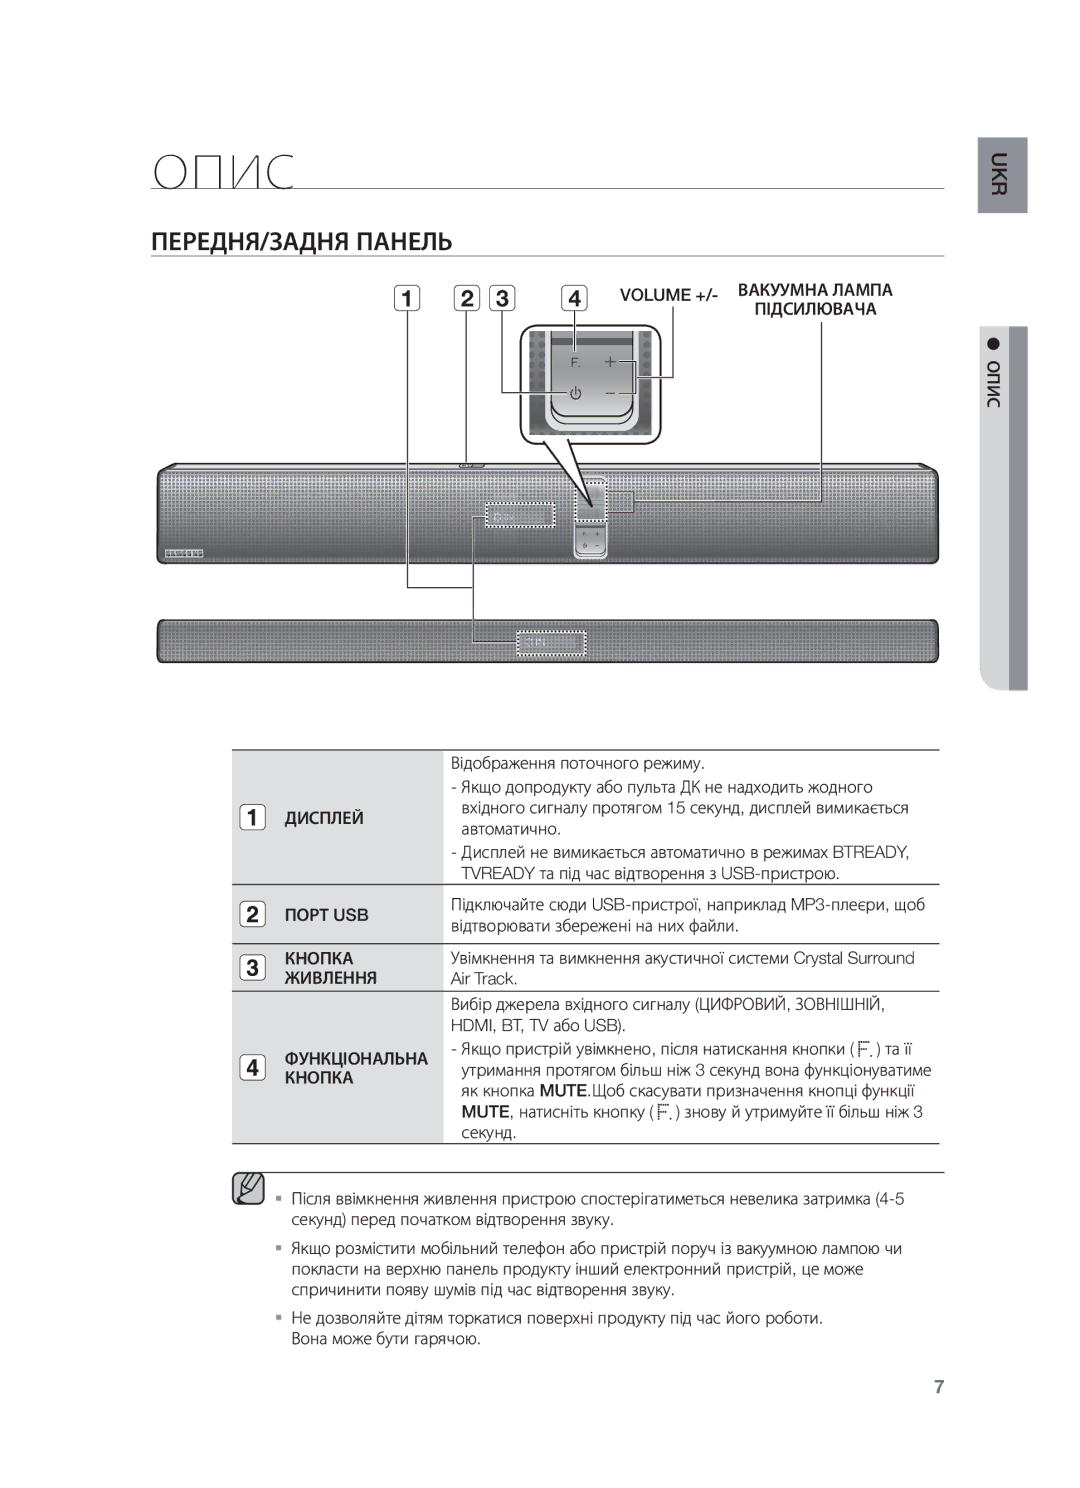 Samsung HW-F750/RU manual Опис, ПЕРЕДНЯ/ЗАДНЯ Панель 